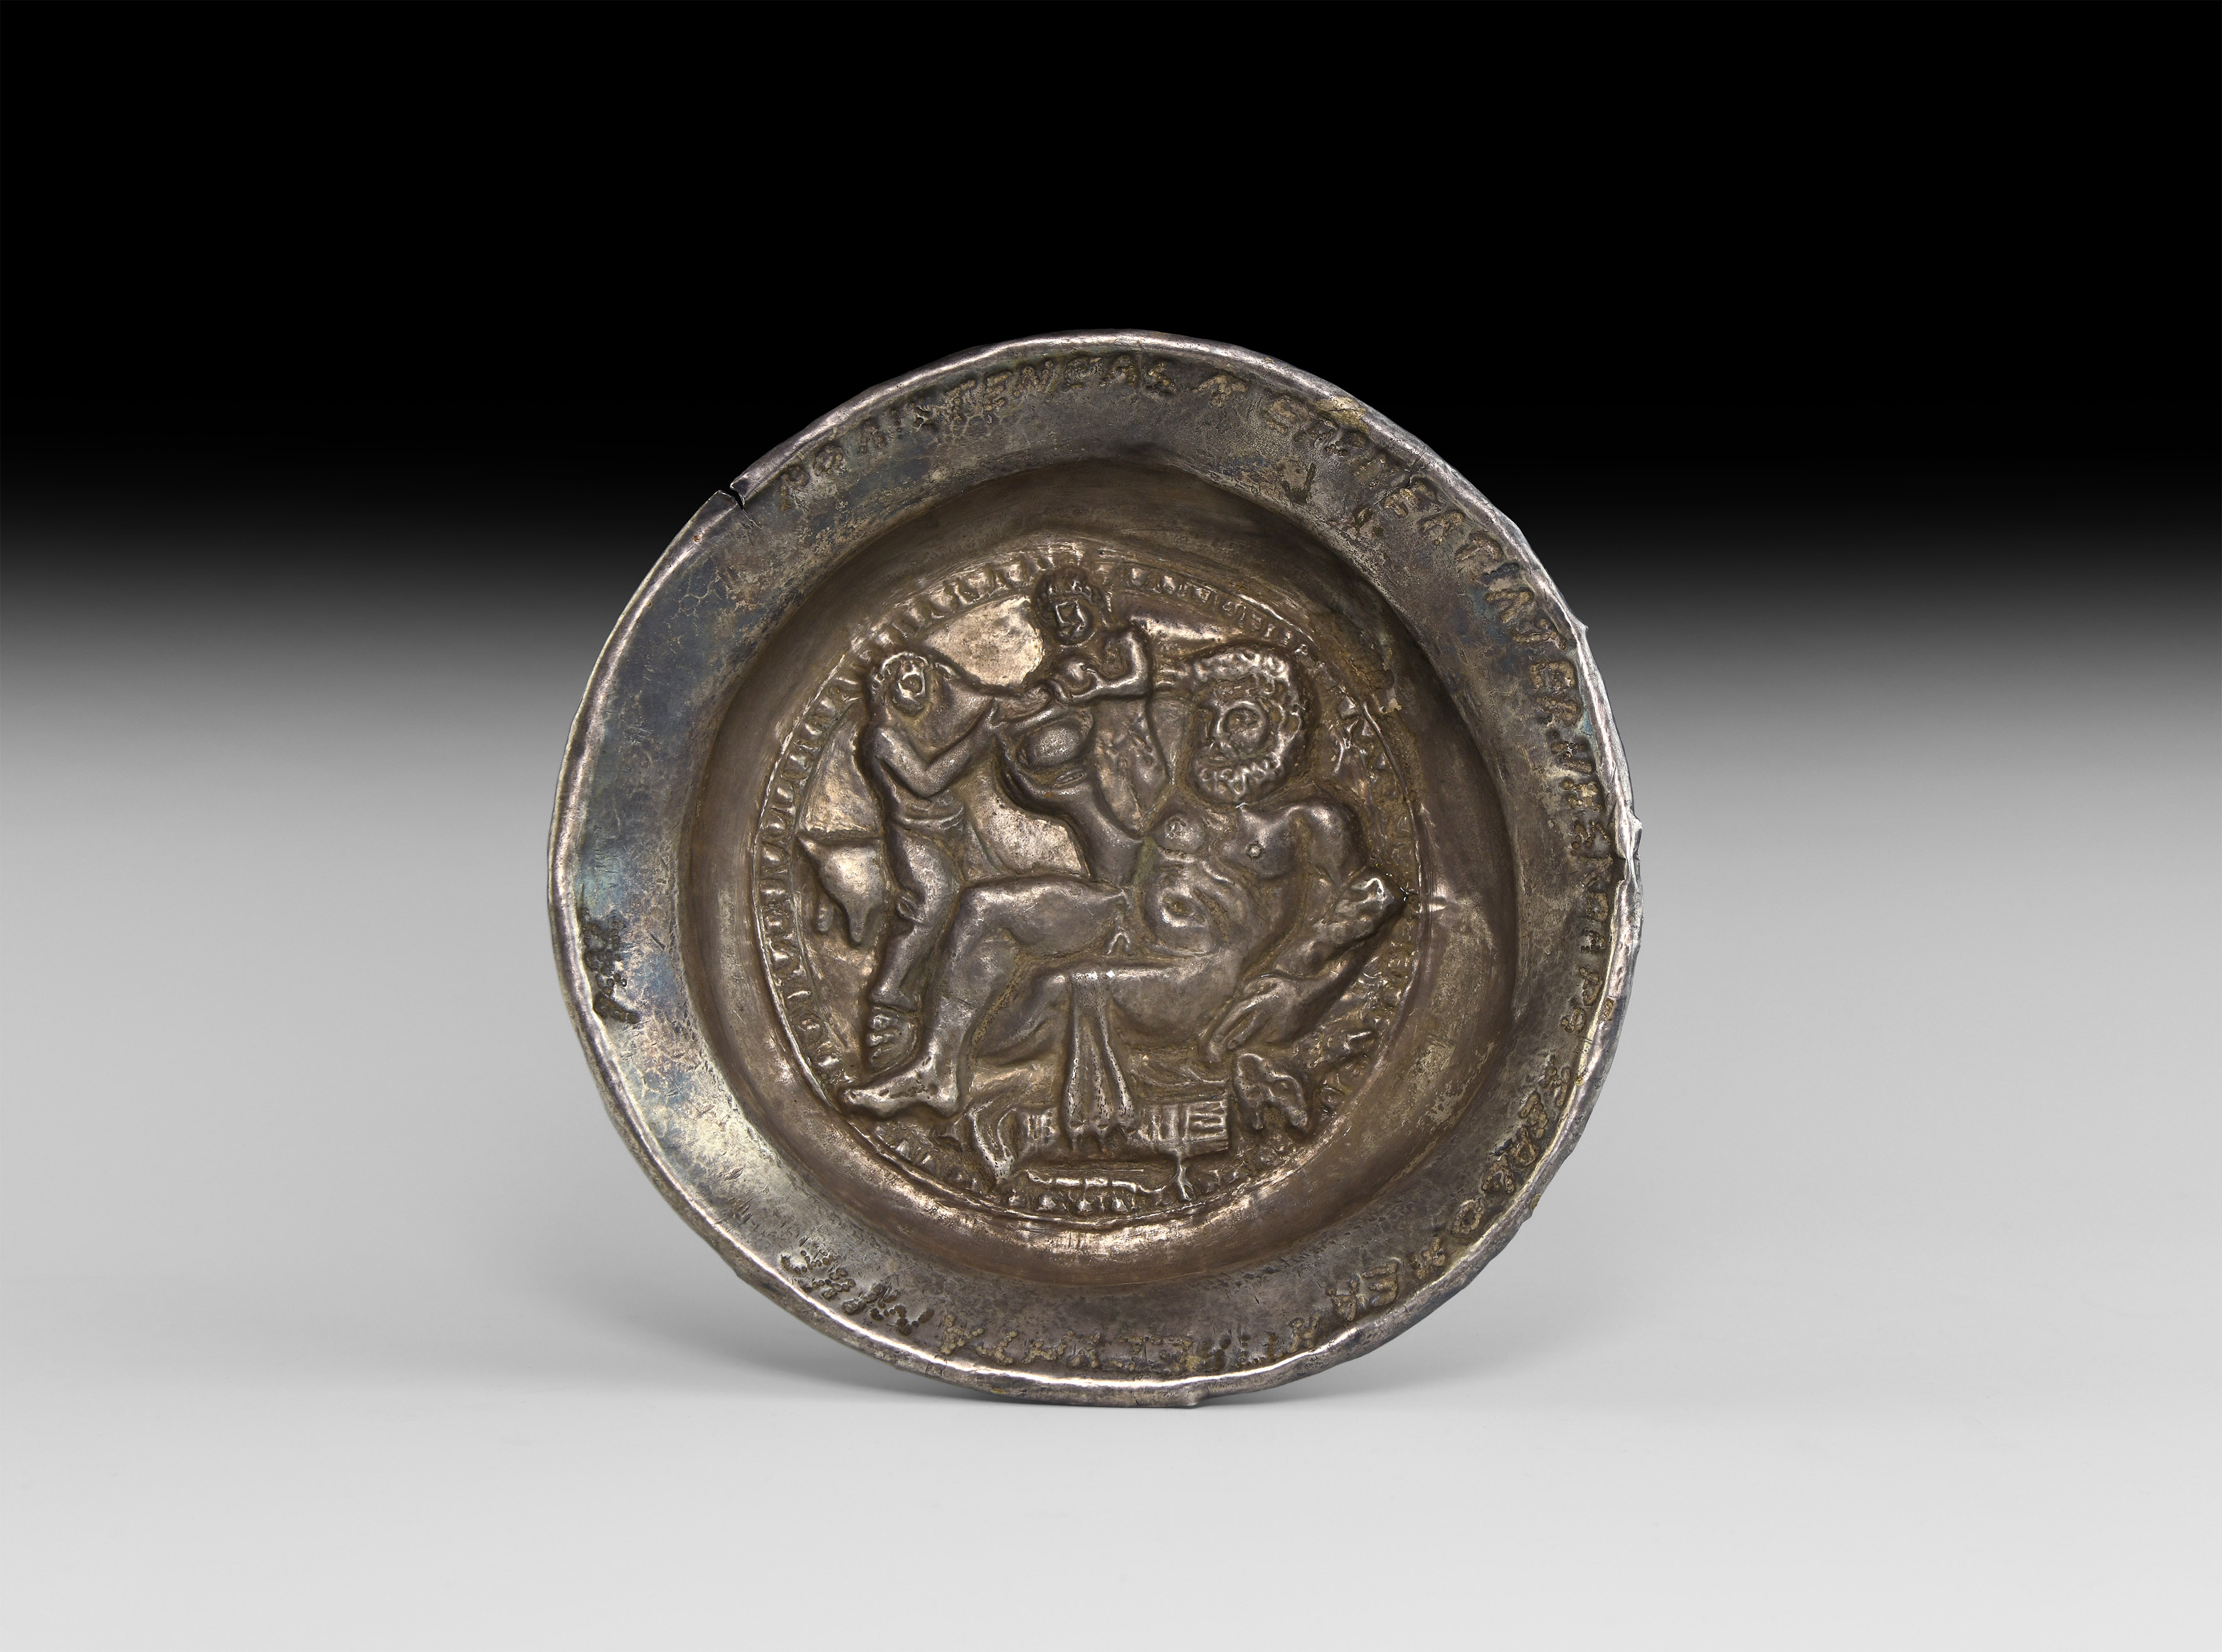 Roman Silver Inscribed Bowl with Scene